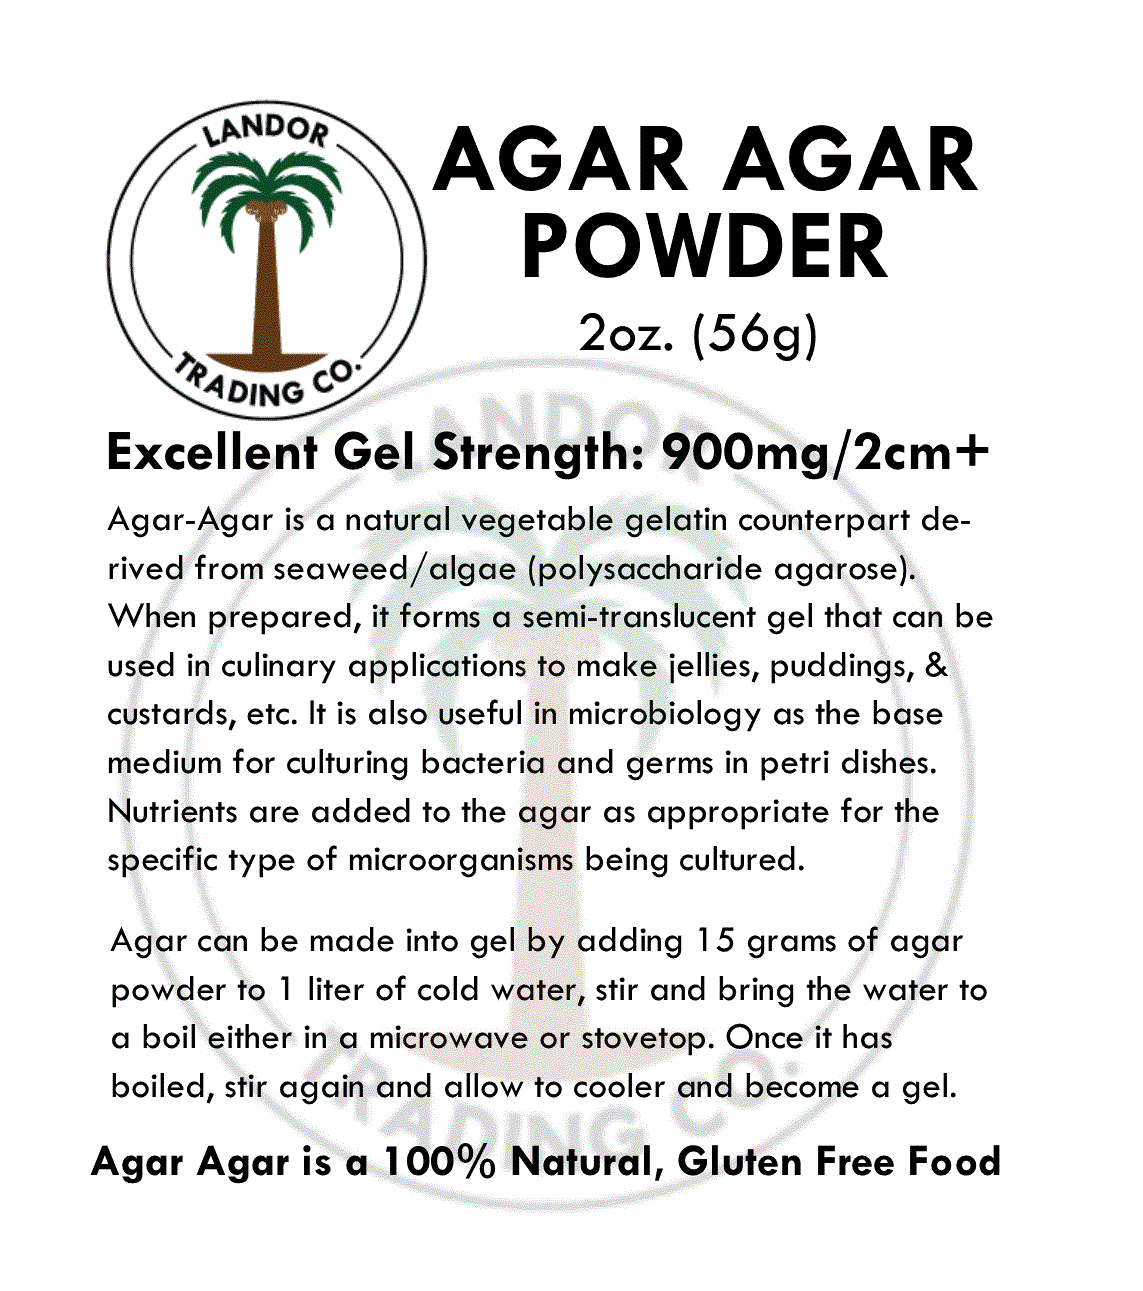 Agar Agar Powder 2oz - Excellent Gel Strength 900g/cm2 - image 4 of 9